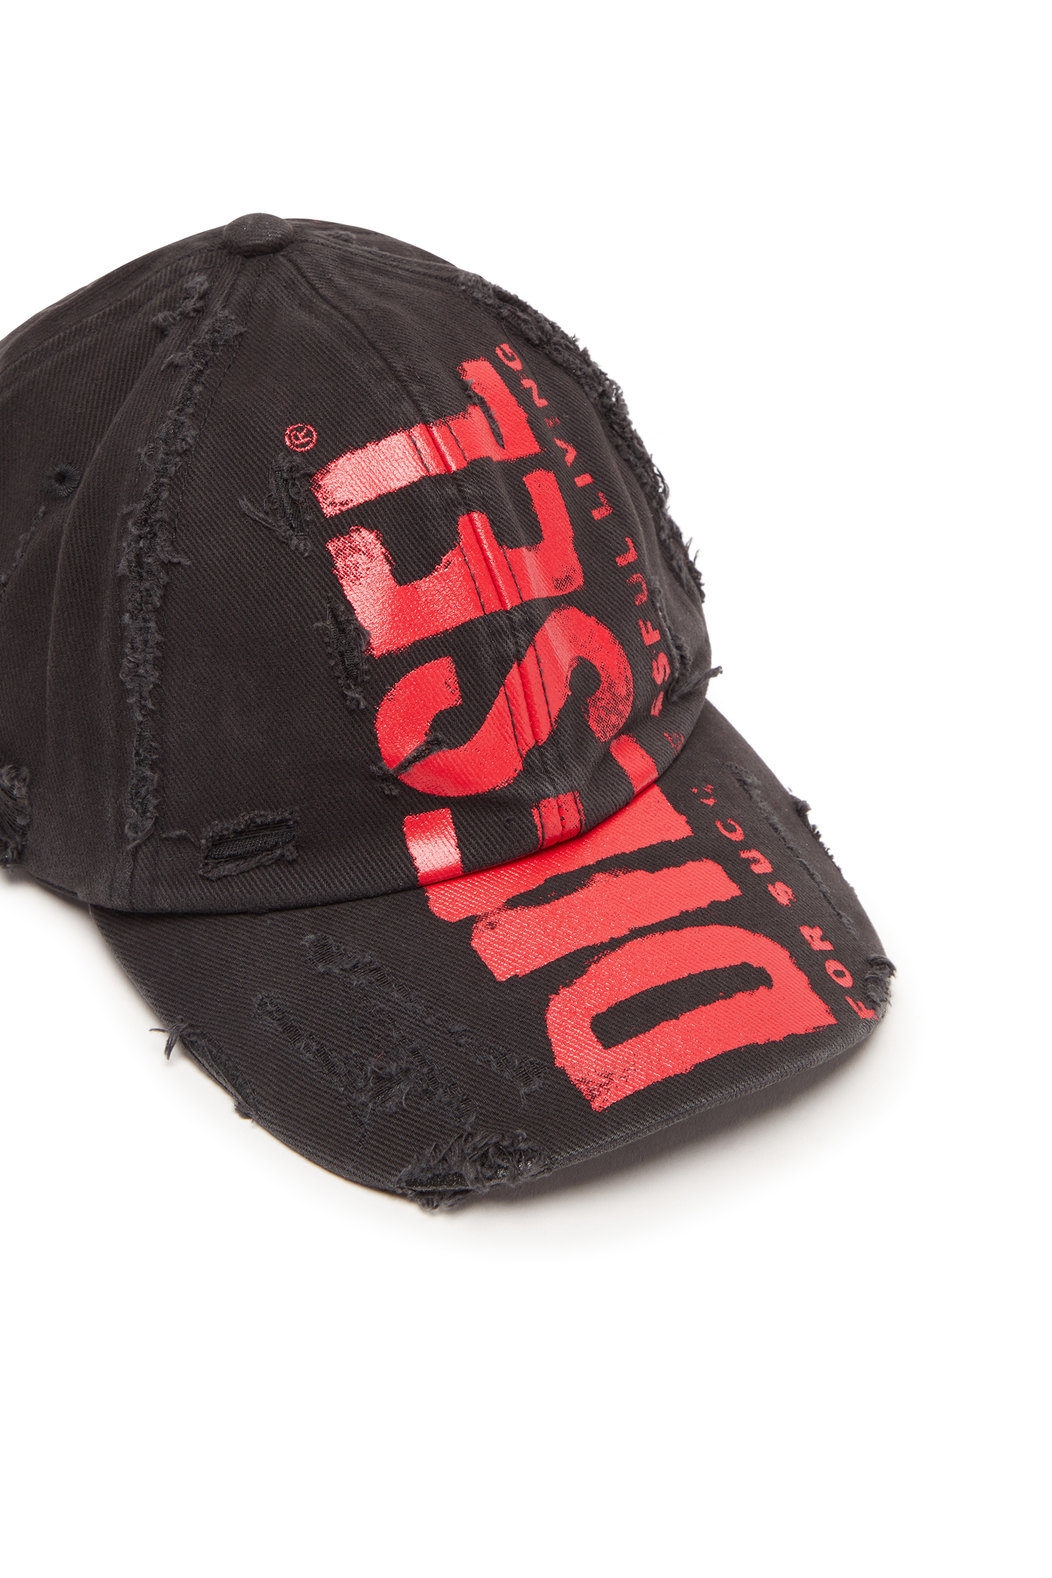 Baseball cap with Diesel lettering